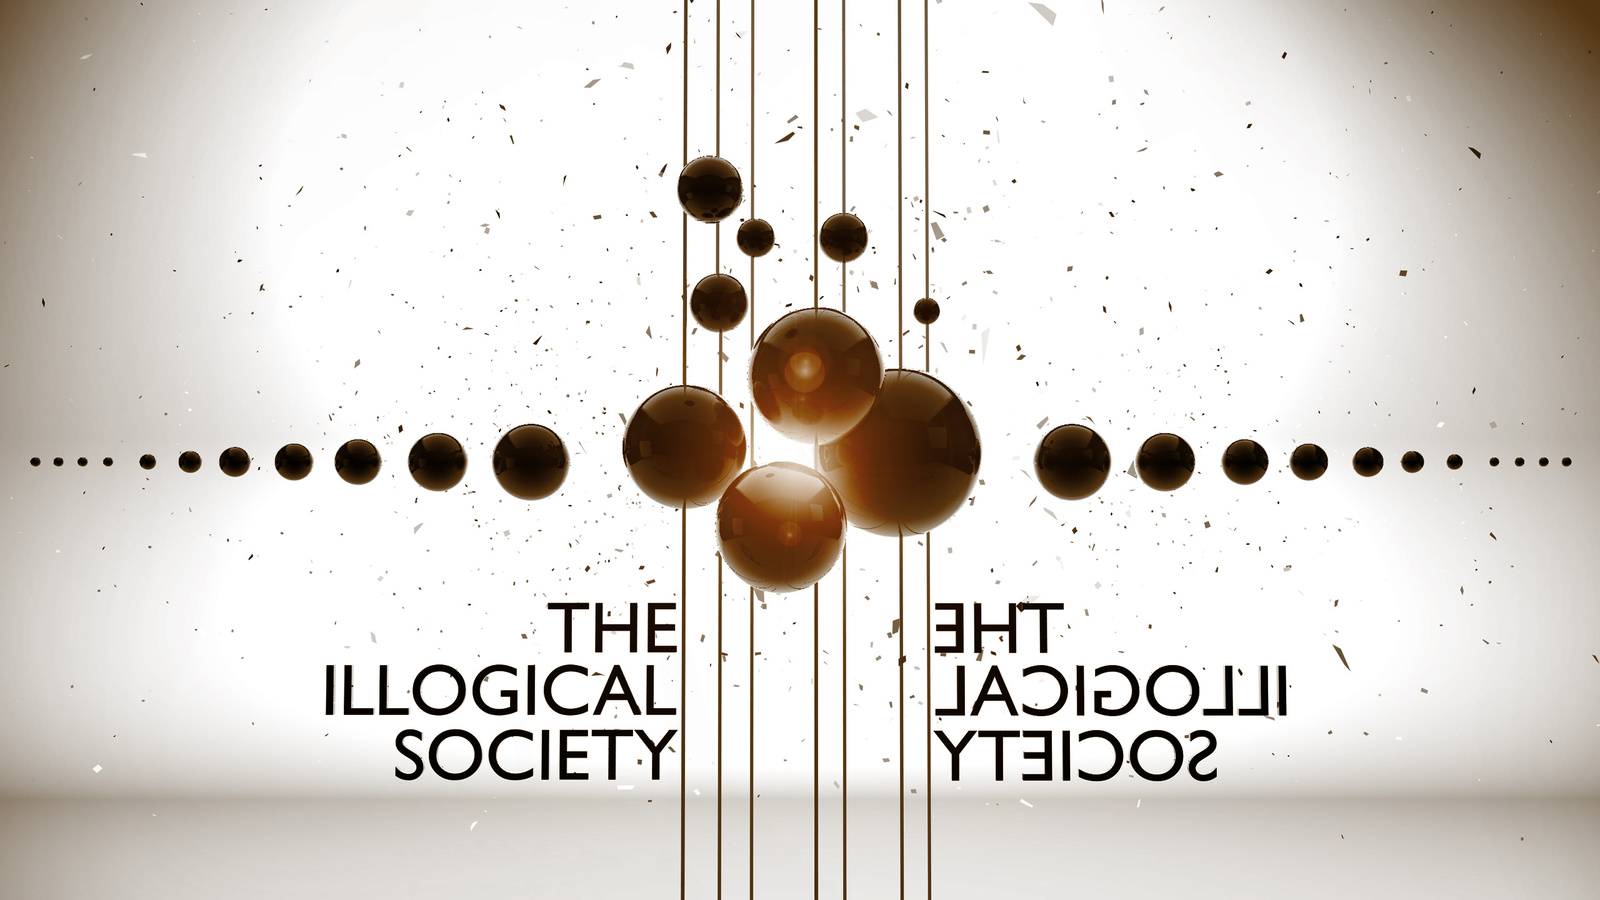 The Illogical Society